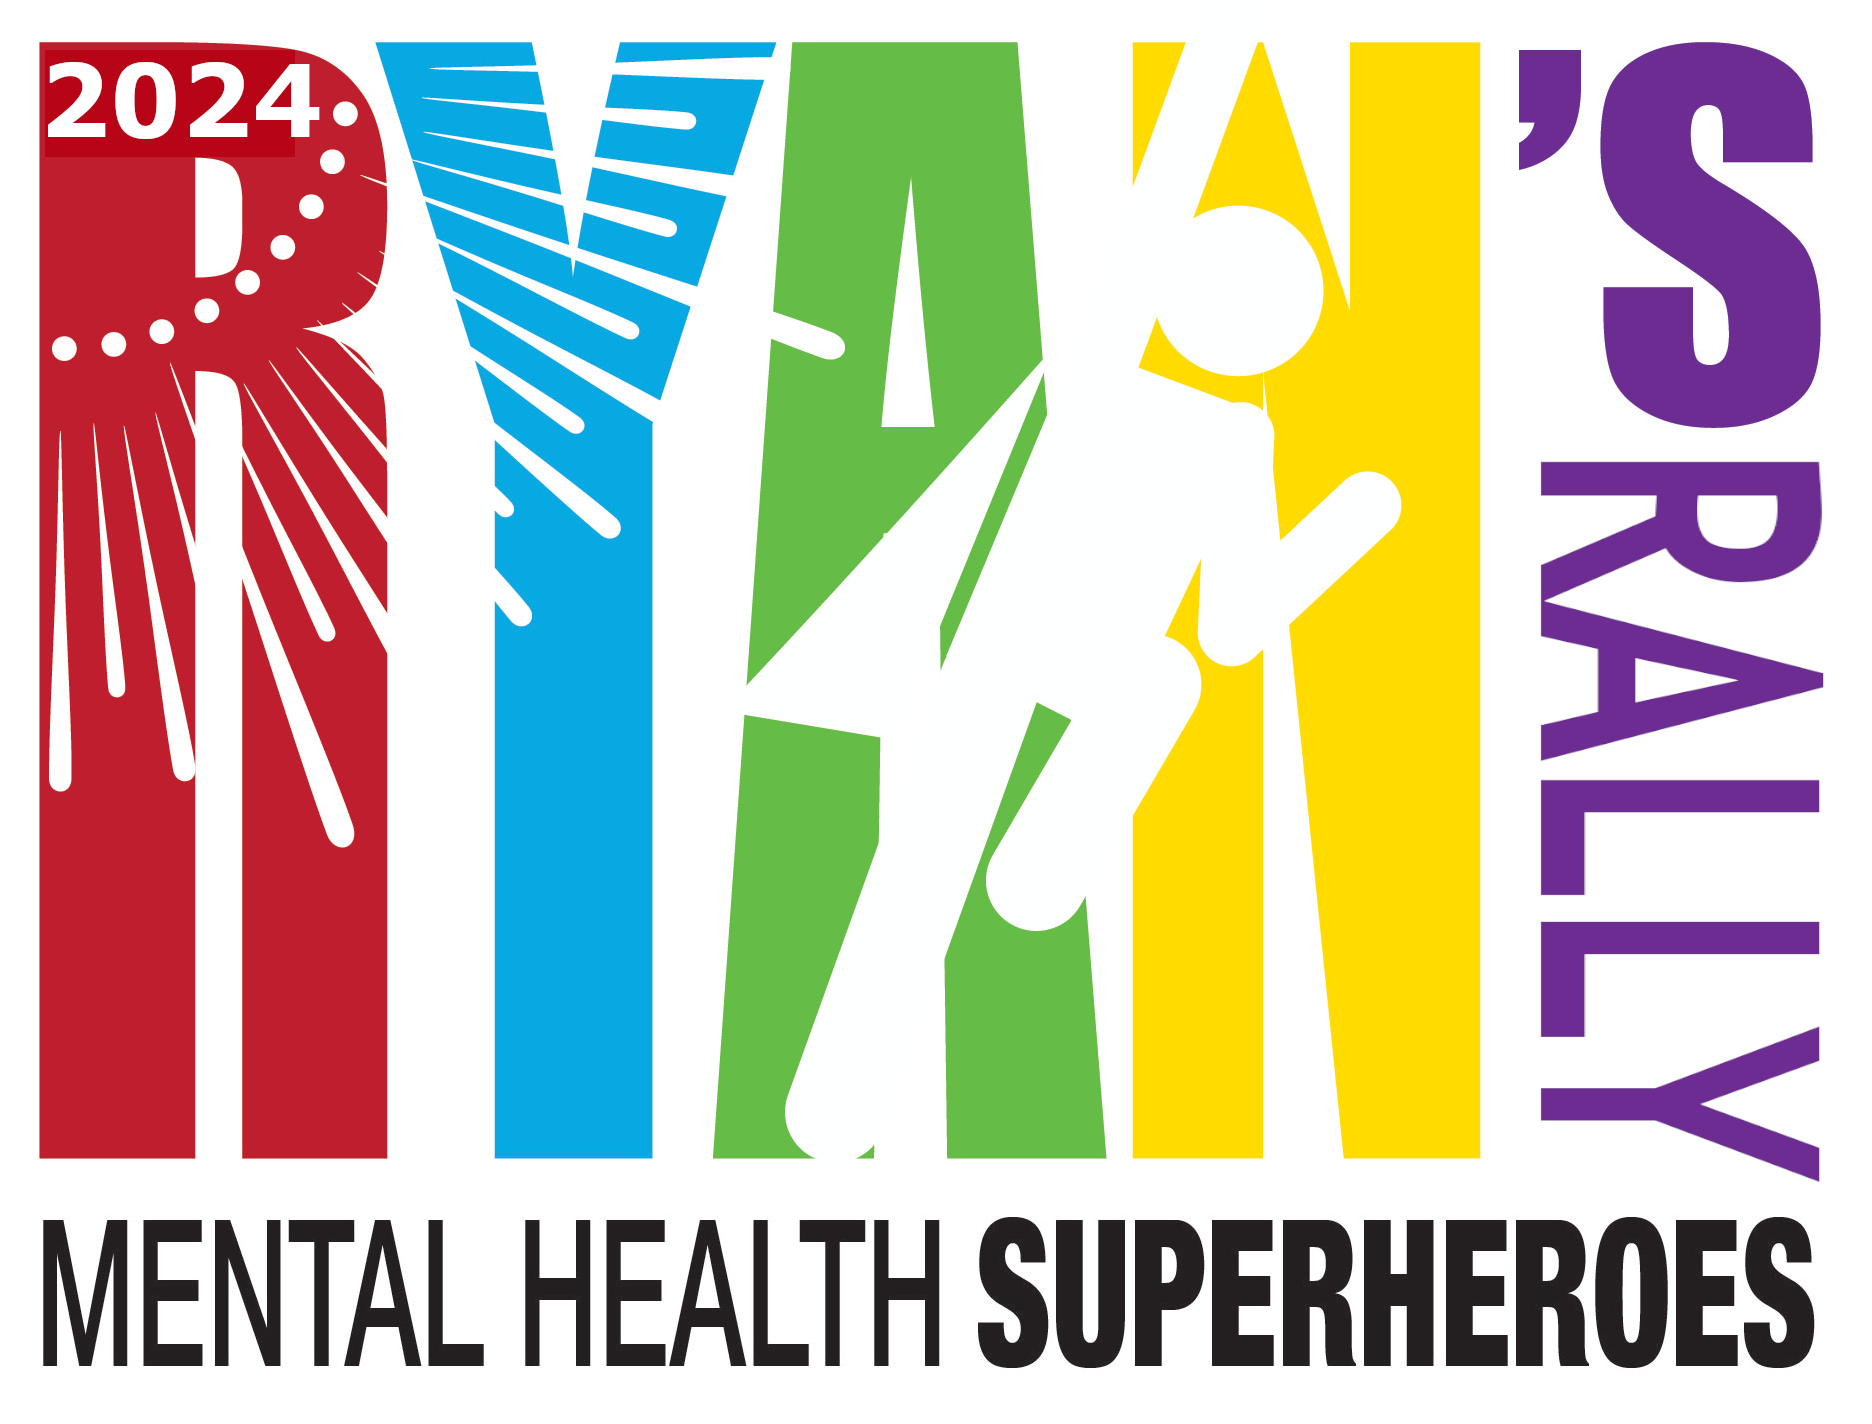 Ryan’s Rally For Mental Health Superheroes logo on RaceRaves